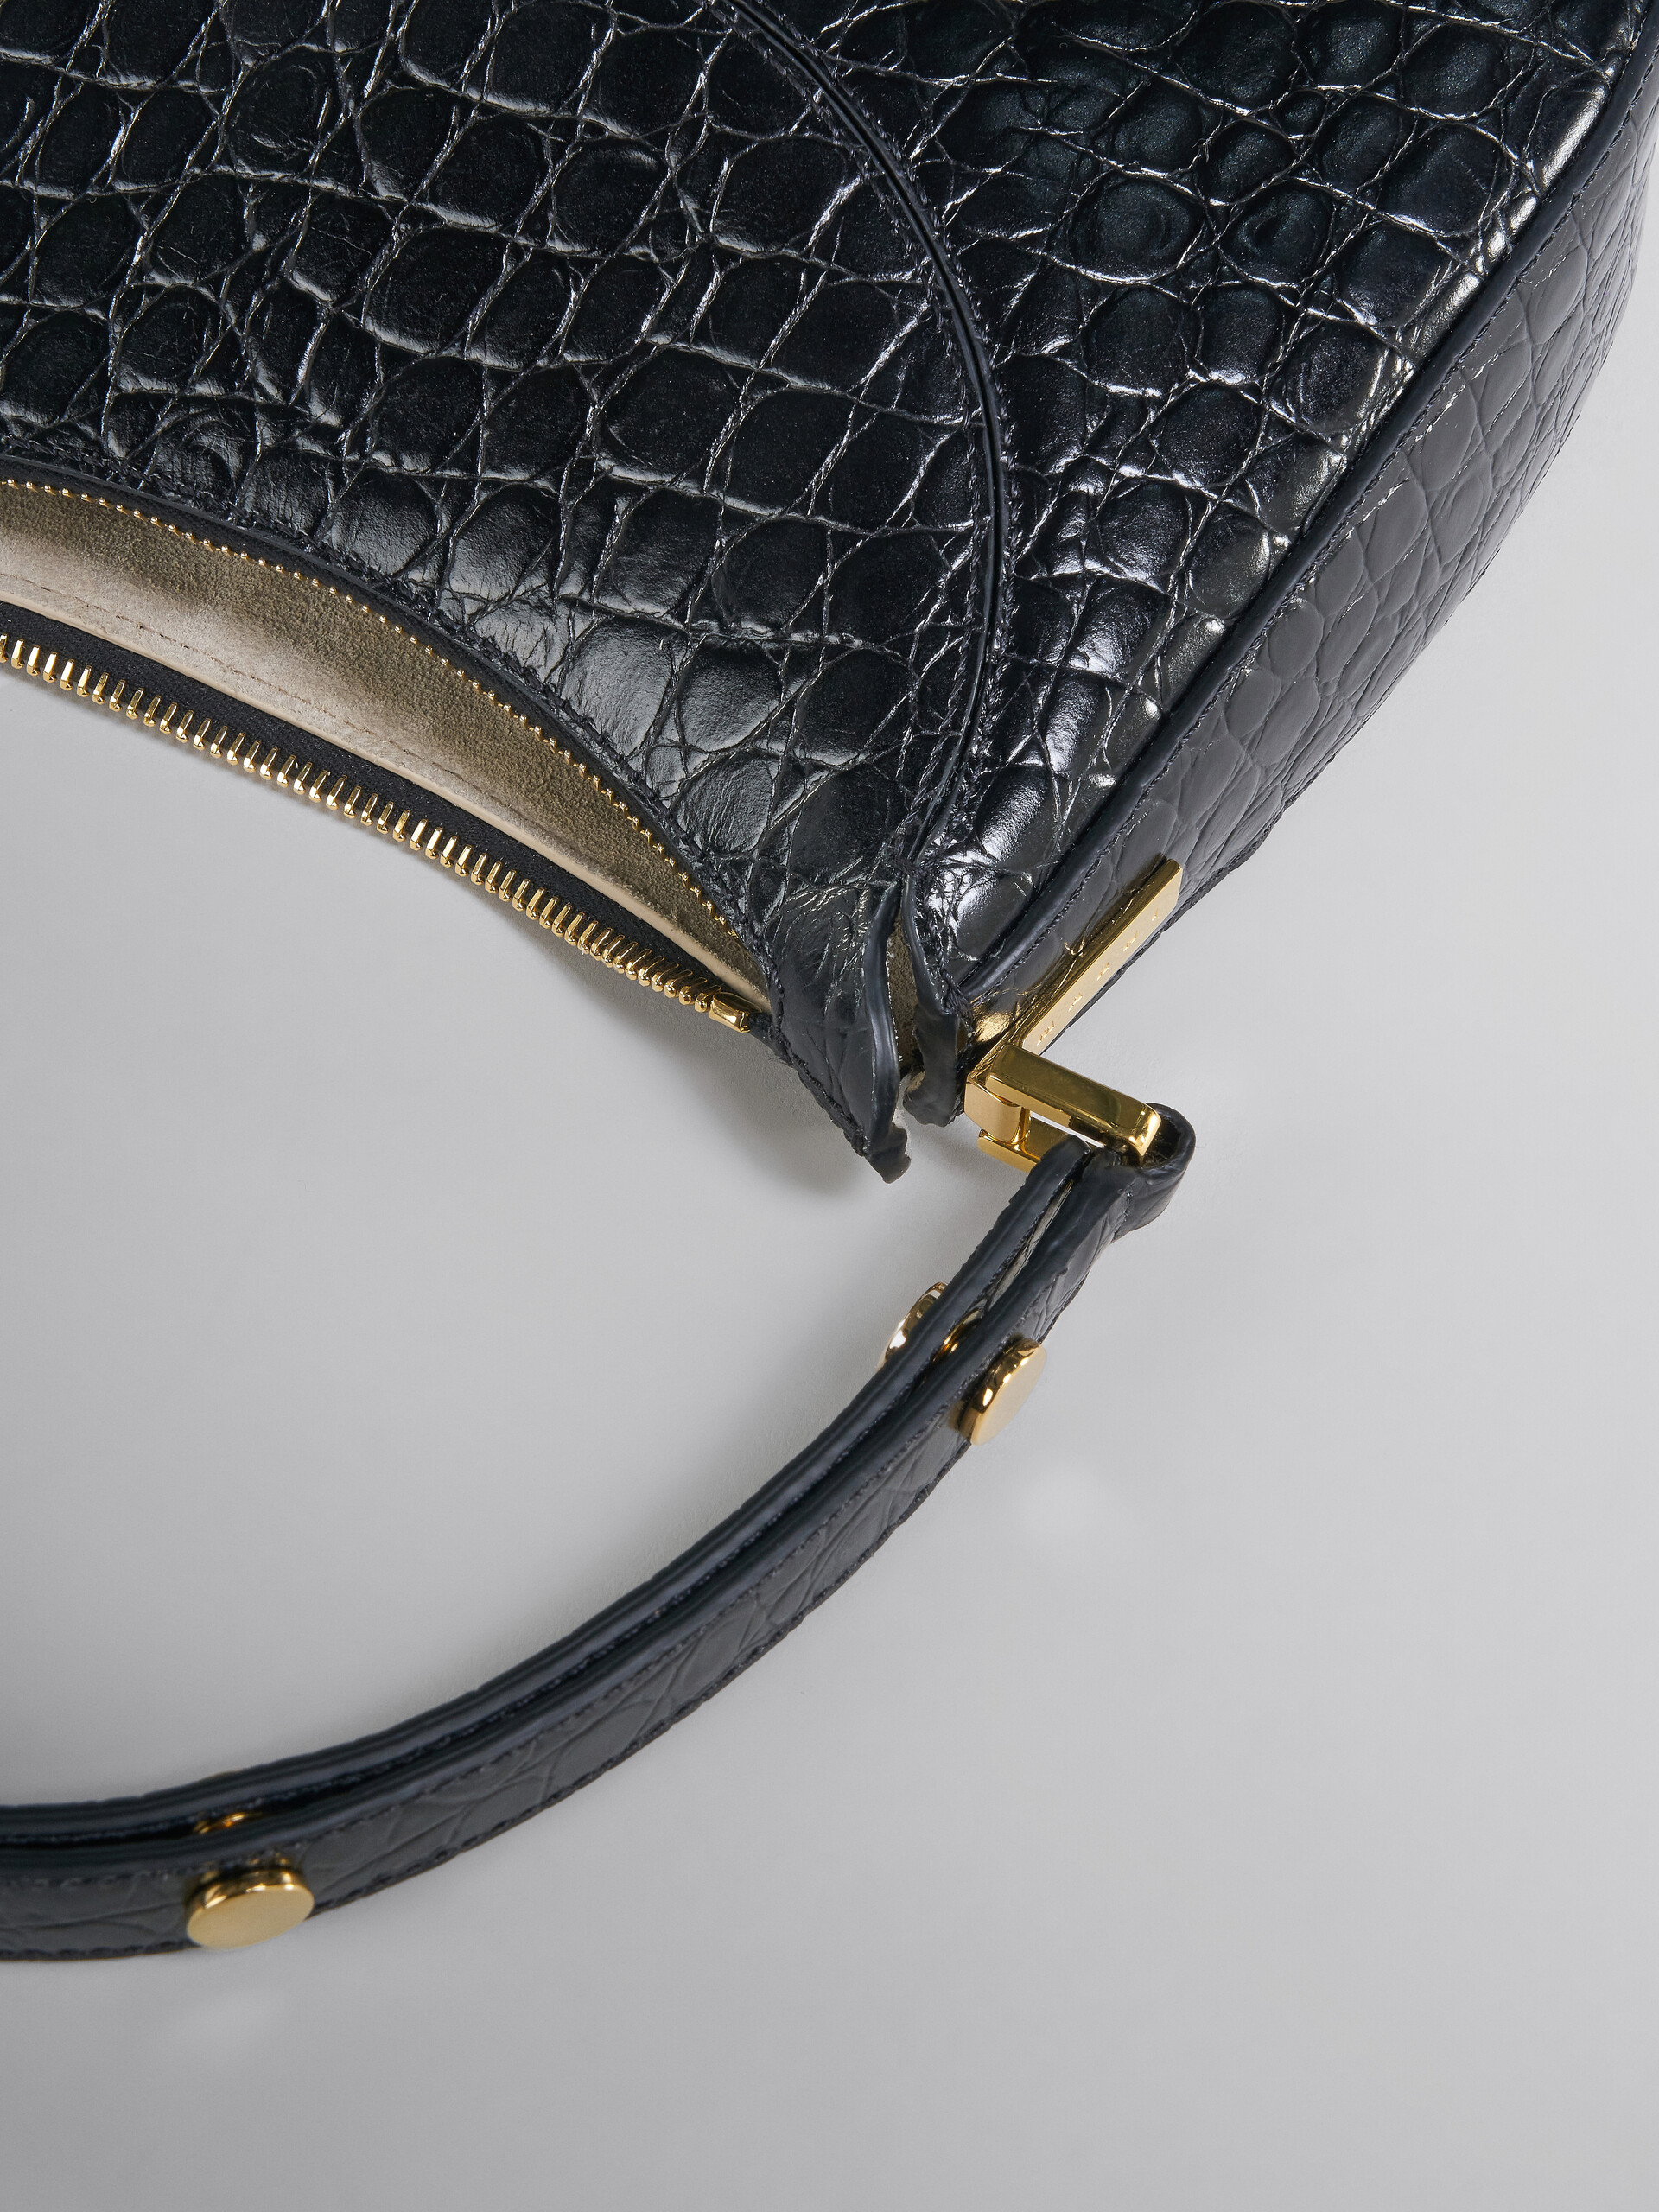 Milano Small Bag in black croco print leather - Handbag - Image 4